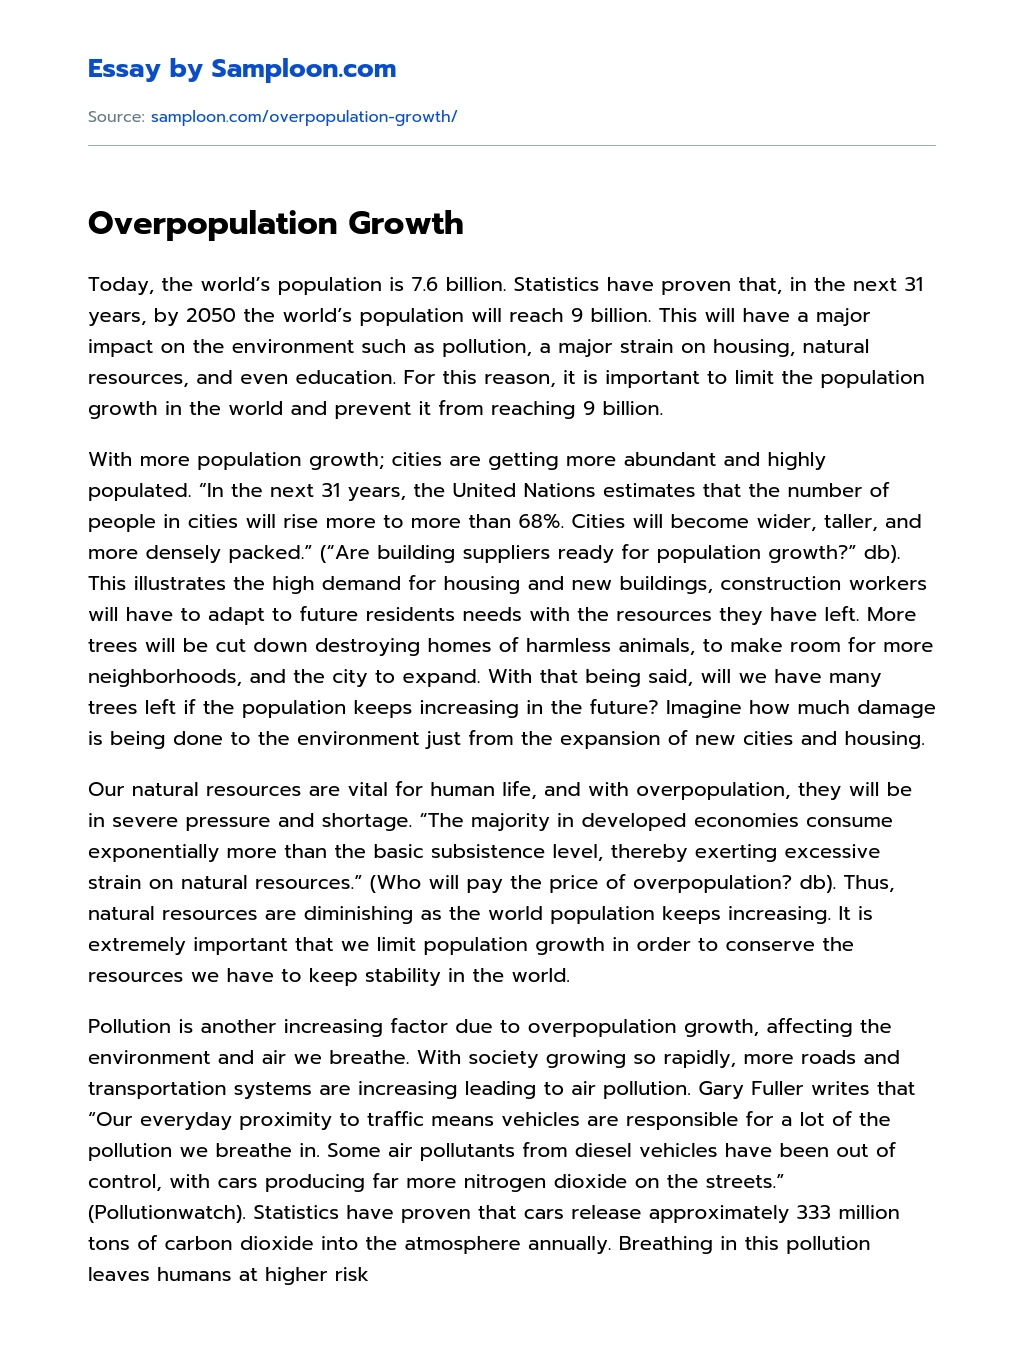 Overpopulation Growth essay